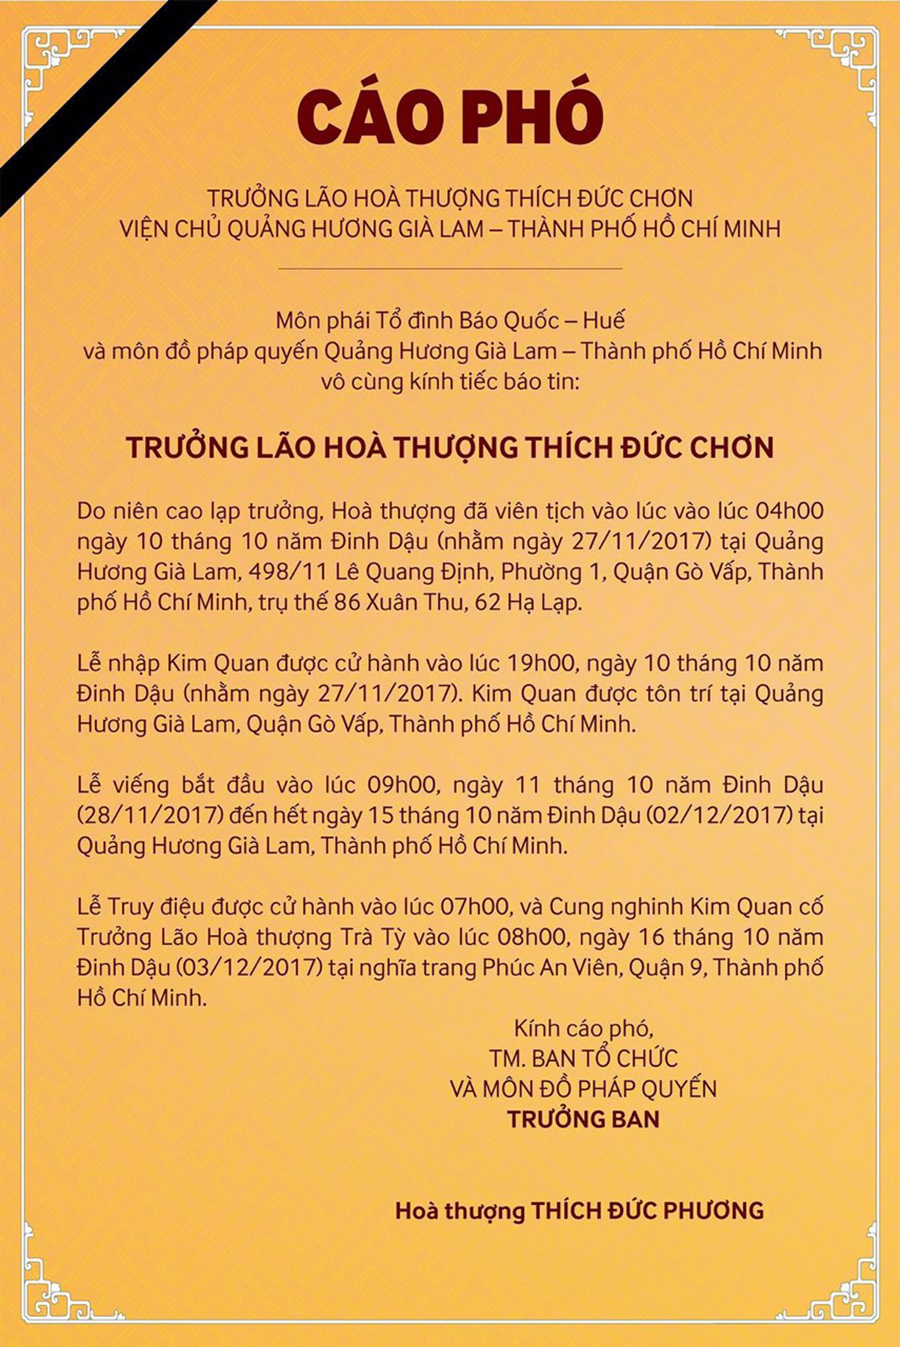 Cao Pho Tang Le HT Duc Chon